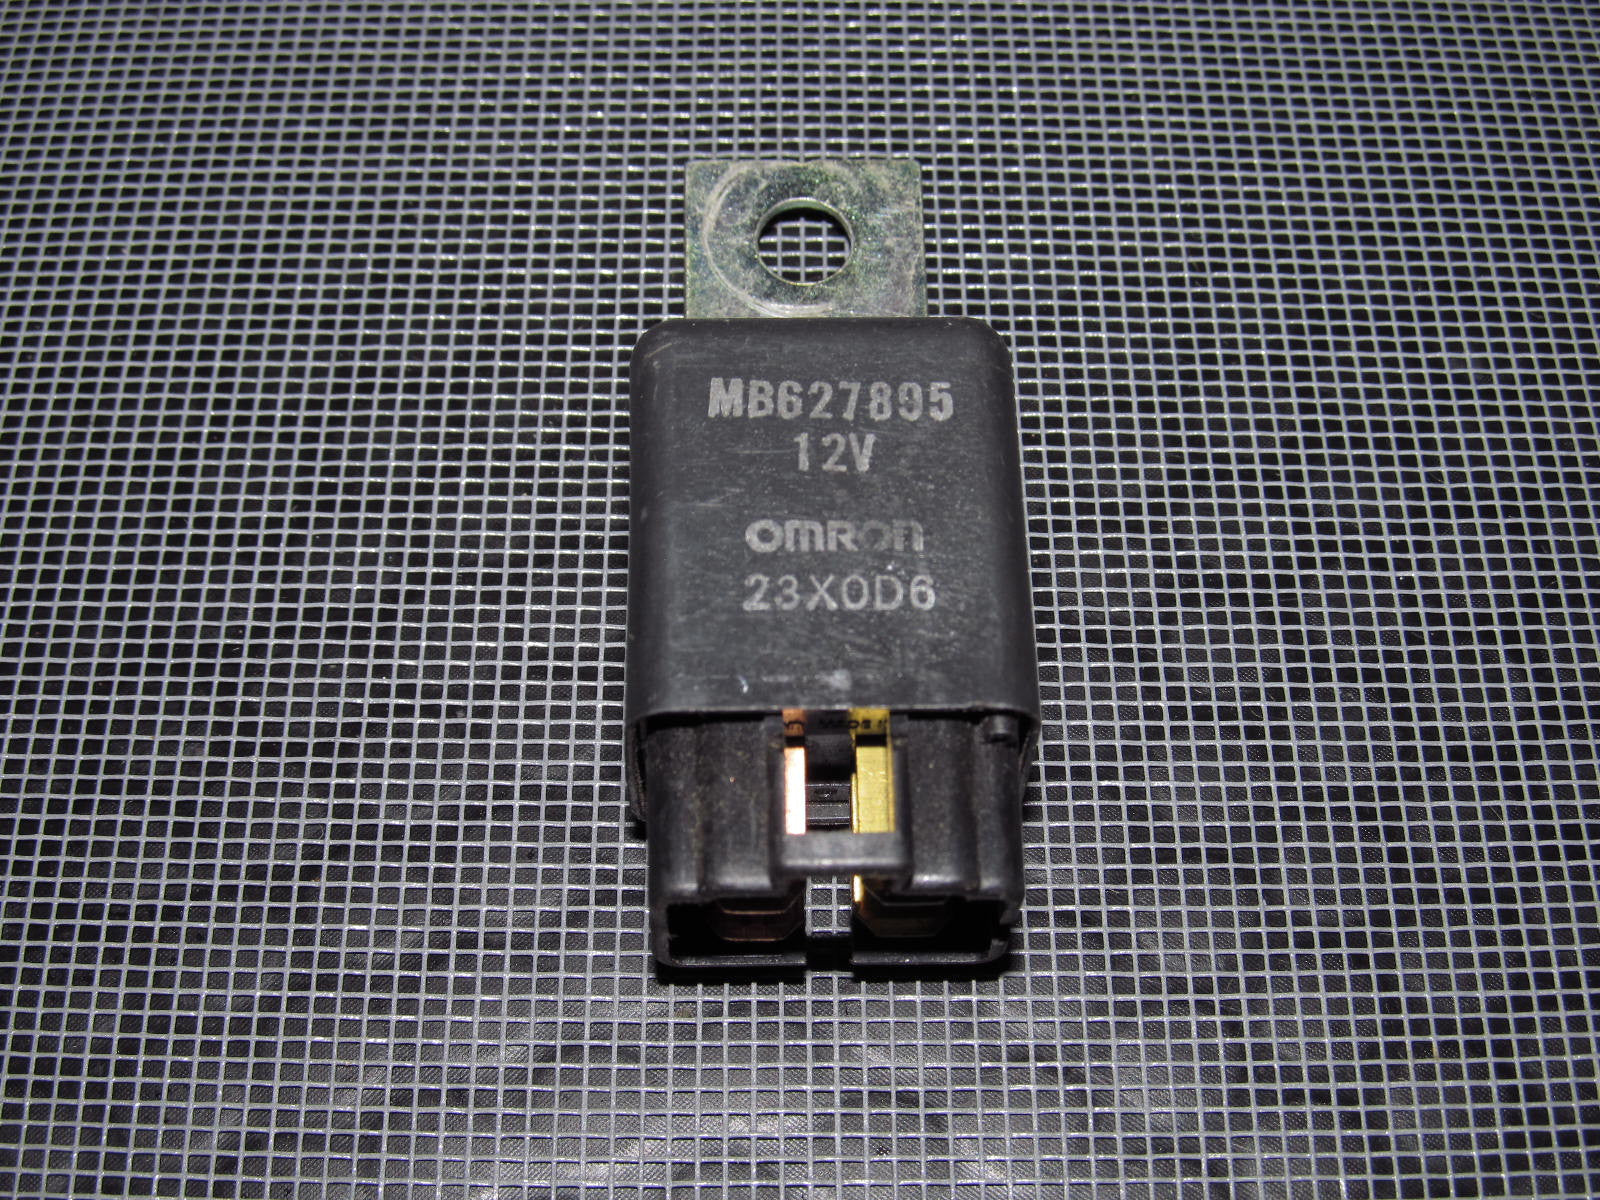 Mitsubishi Universal Relay MB627895 with Harness